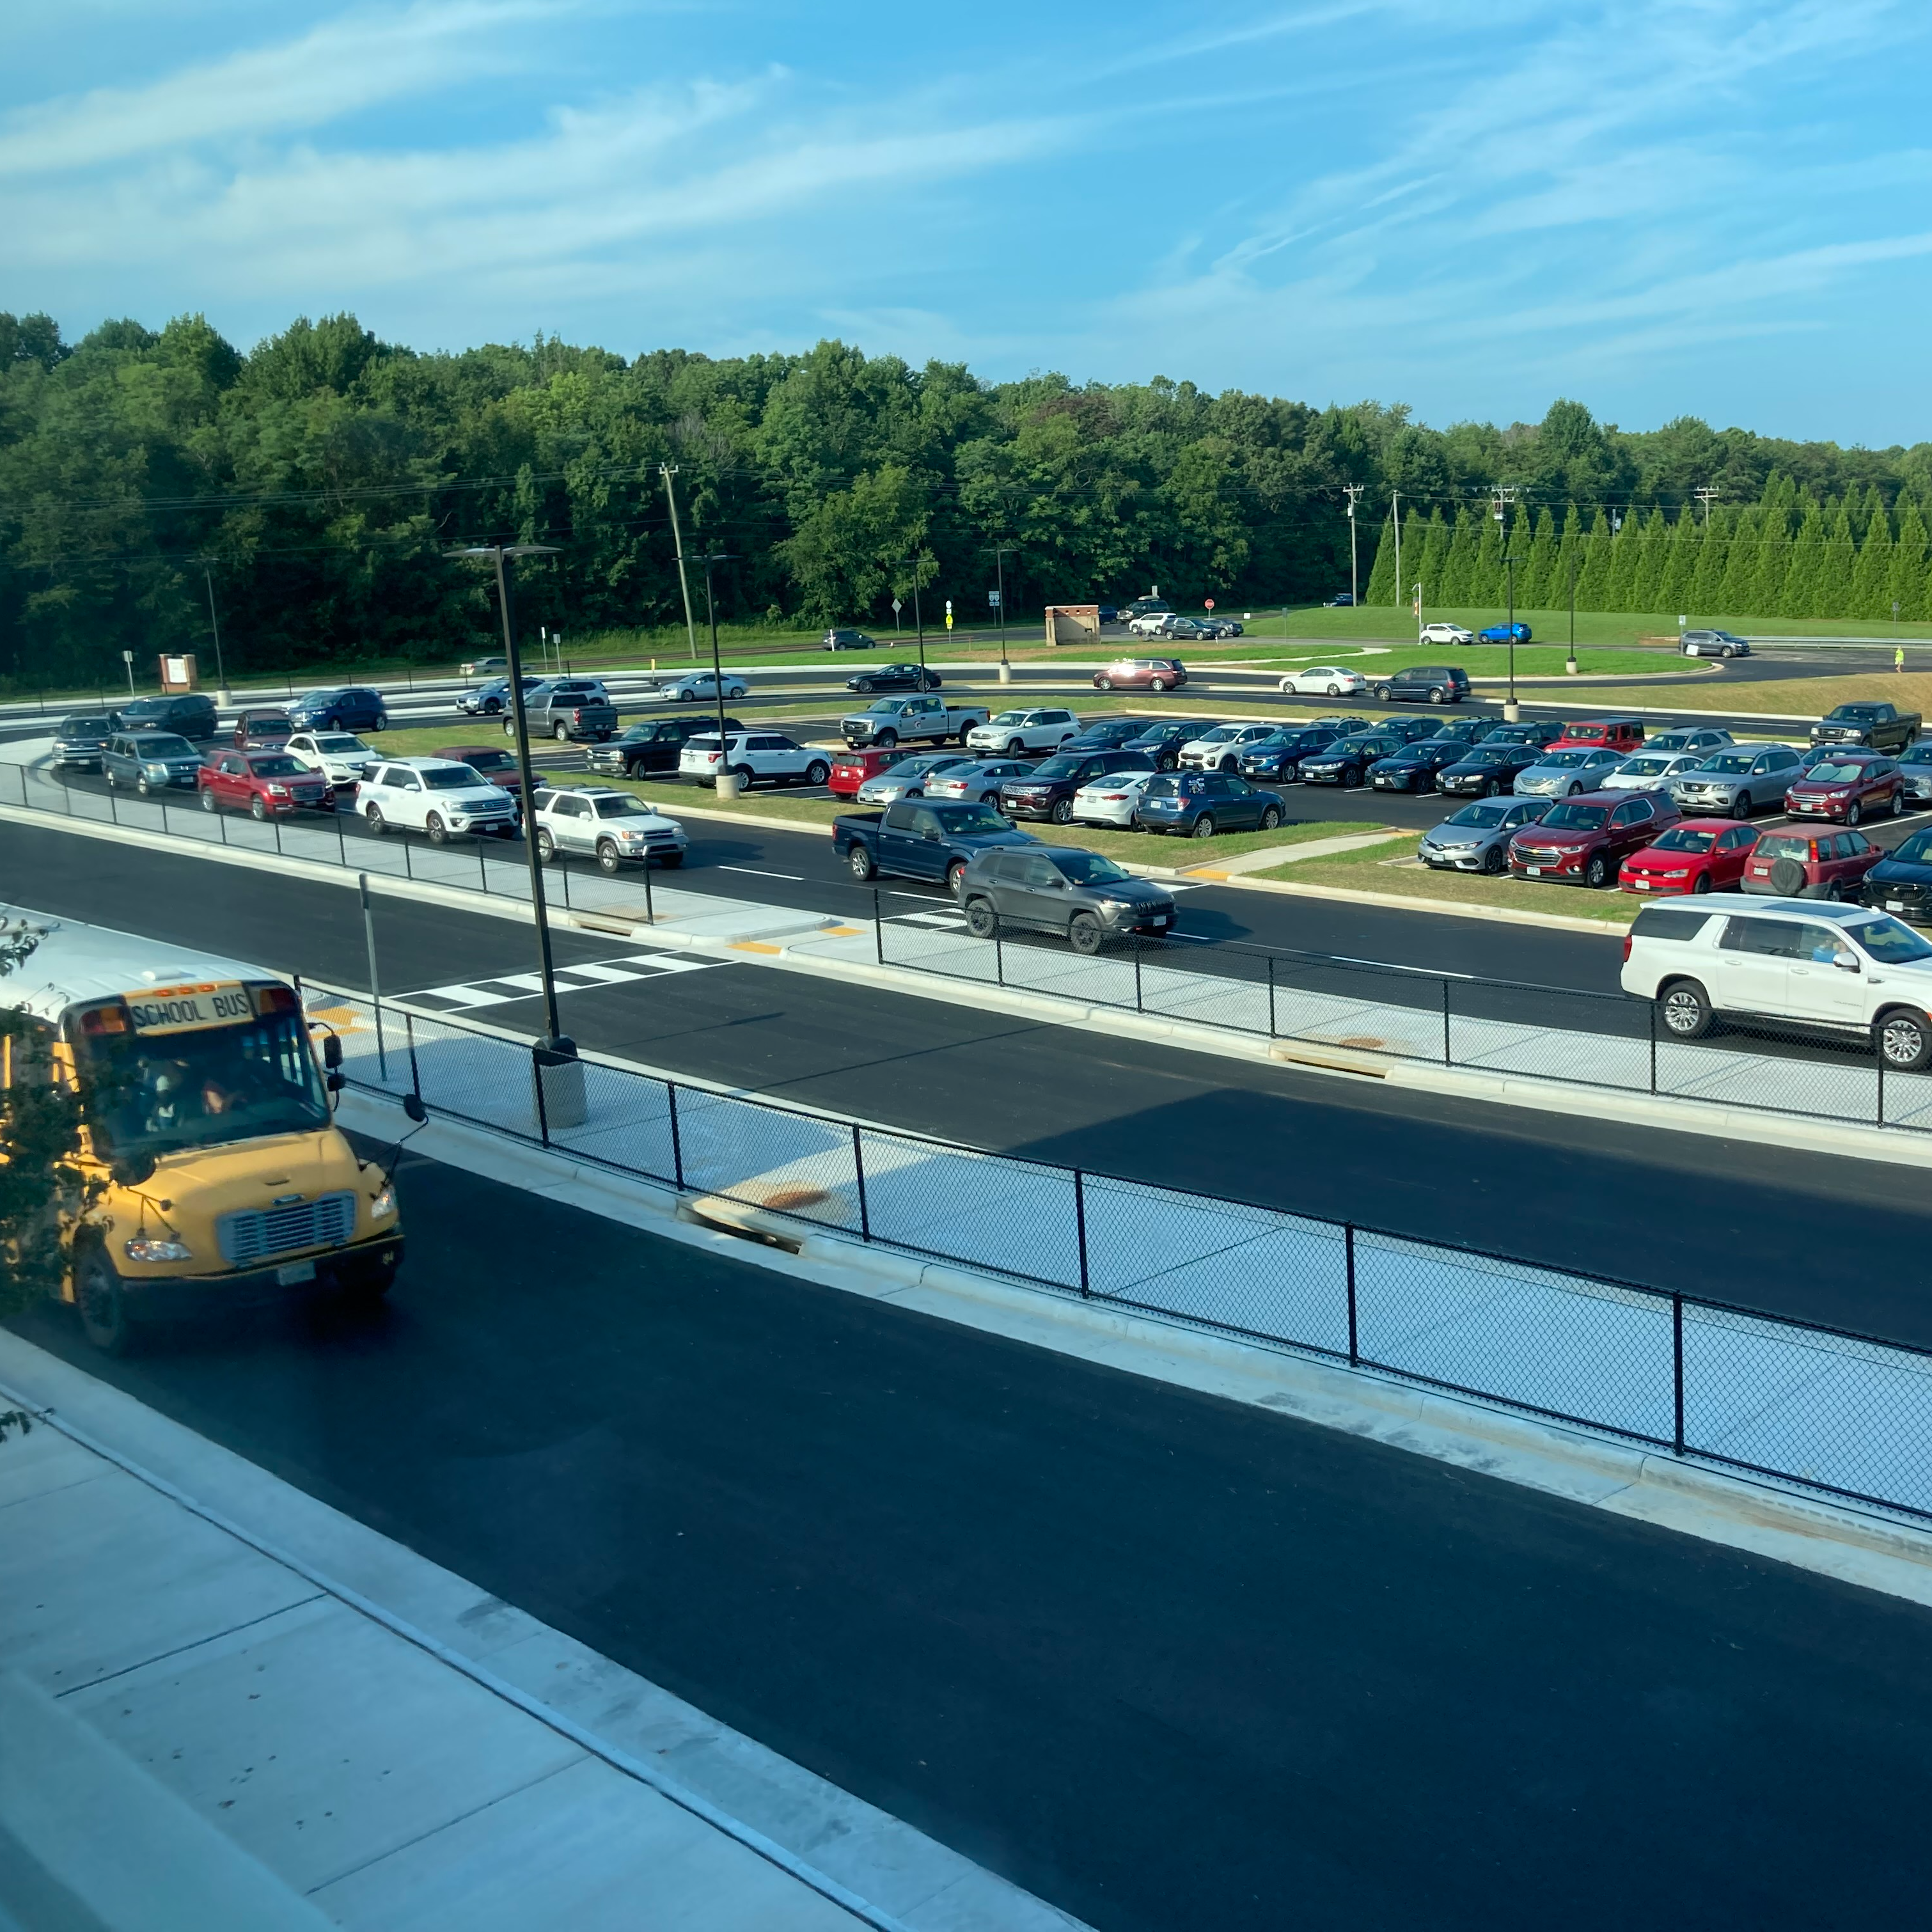 GMS/GHS parking lot - parent vehicles  in double line pick-up area